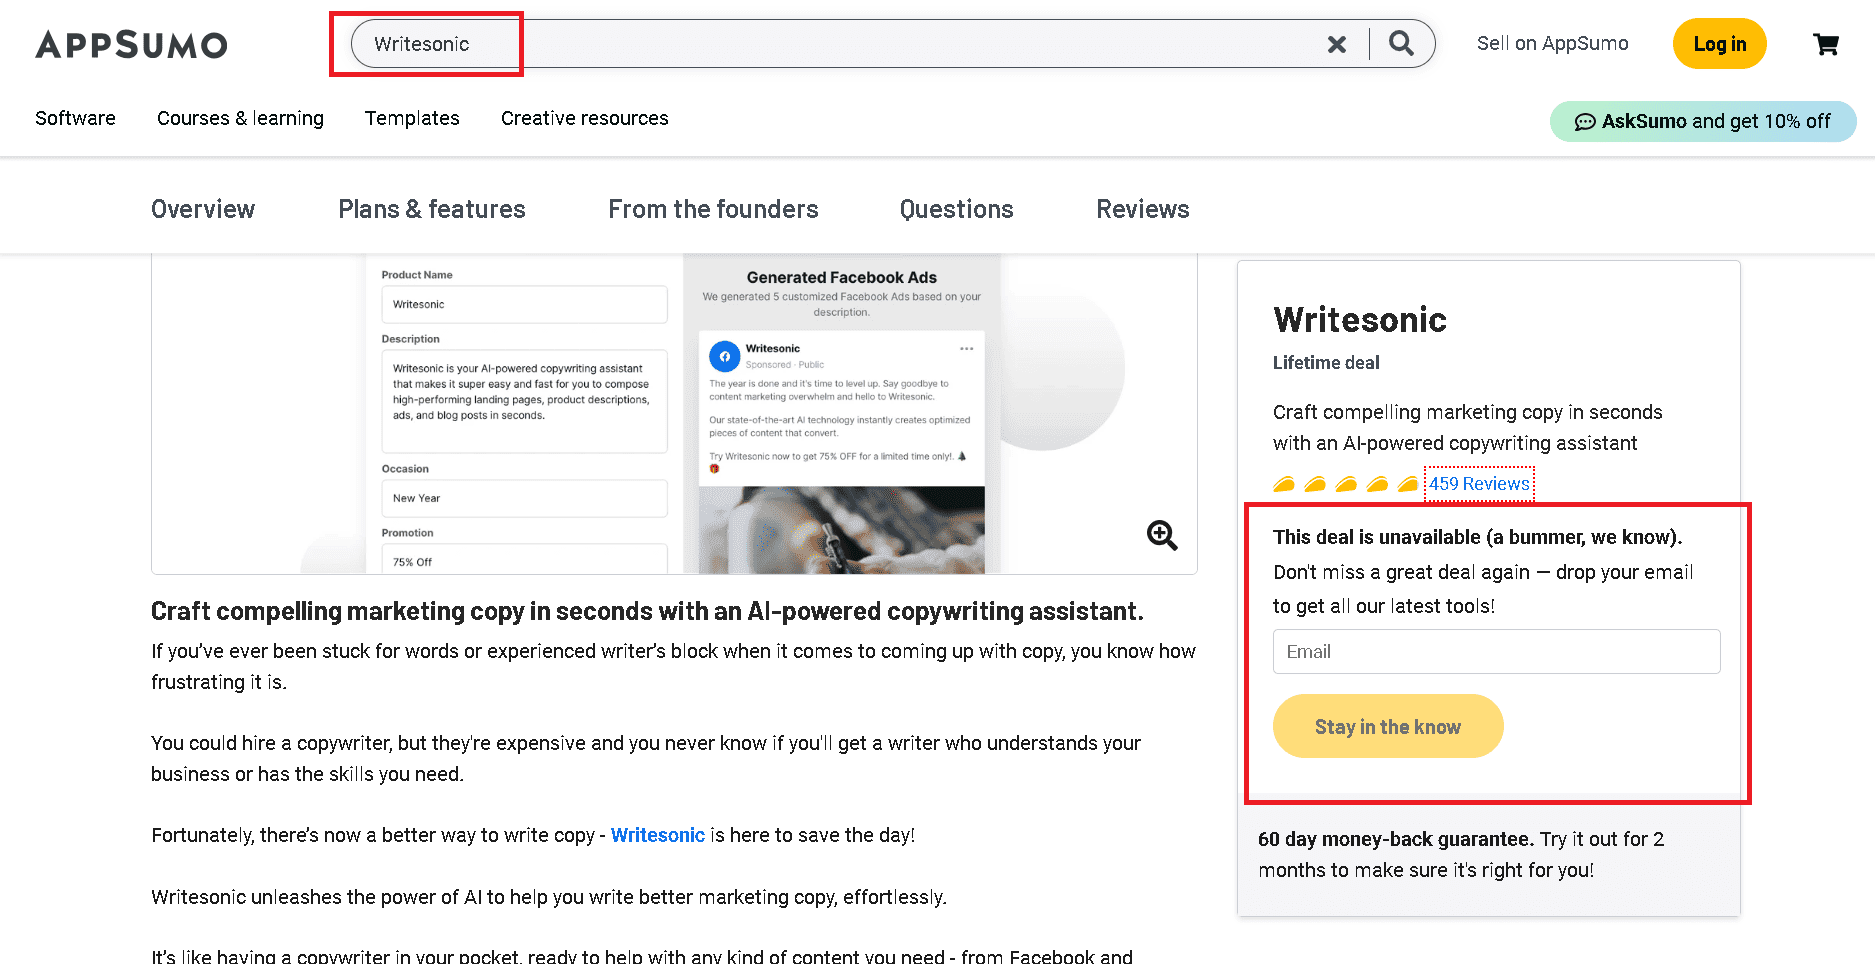 Writesonic AppSumo lifetime deal doesn't exist